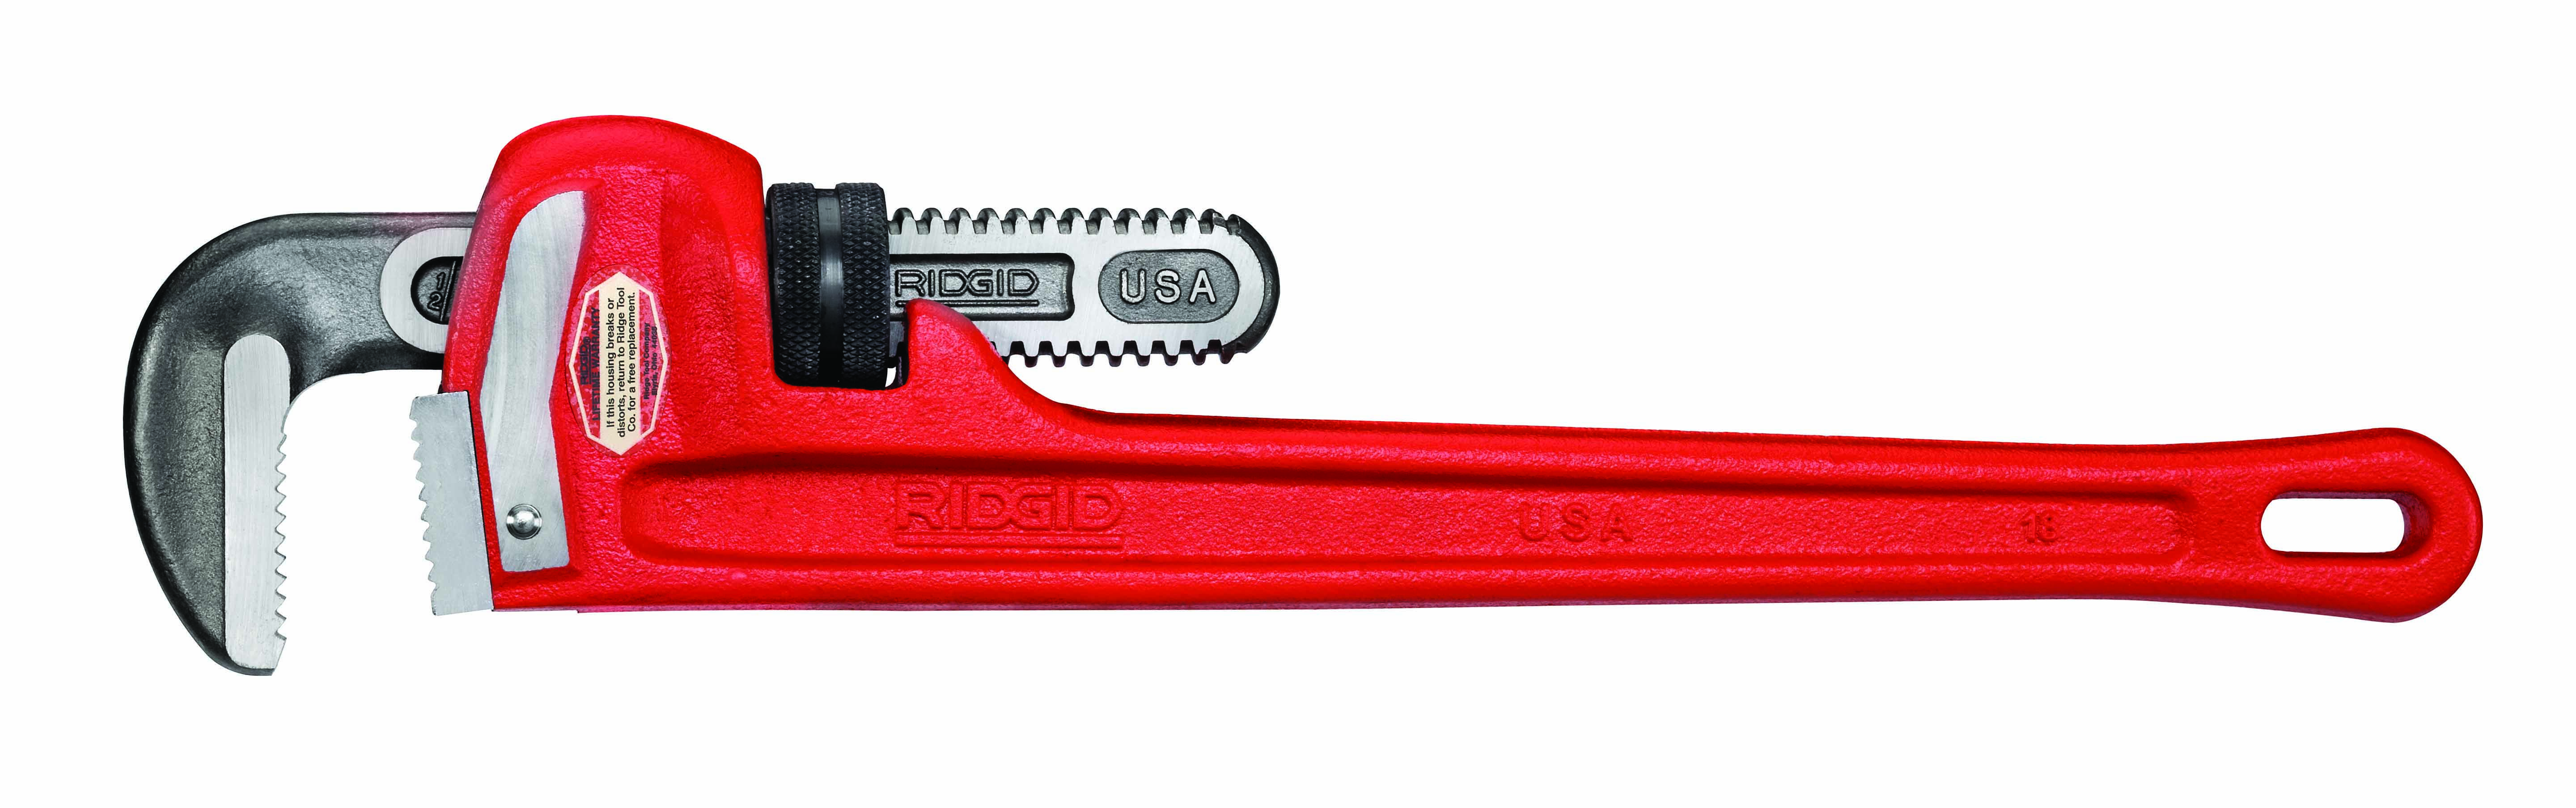 18-inch Plumbing Ridgid RIDGID 31025 Model 18 Heavy-Duty Straight Pipe Wrench